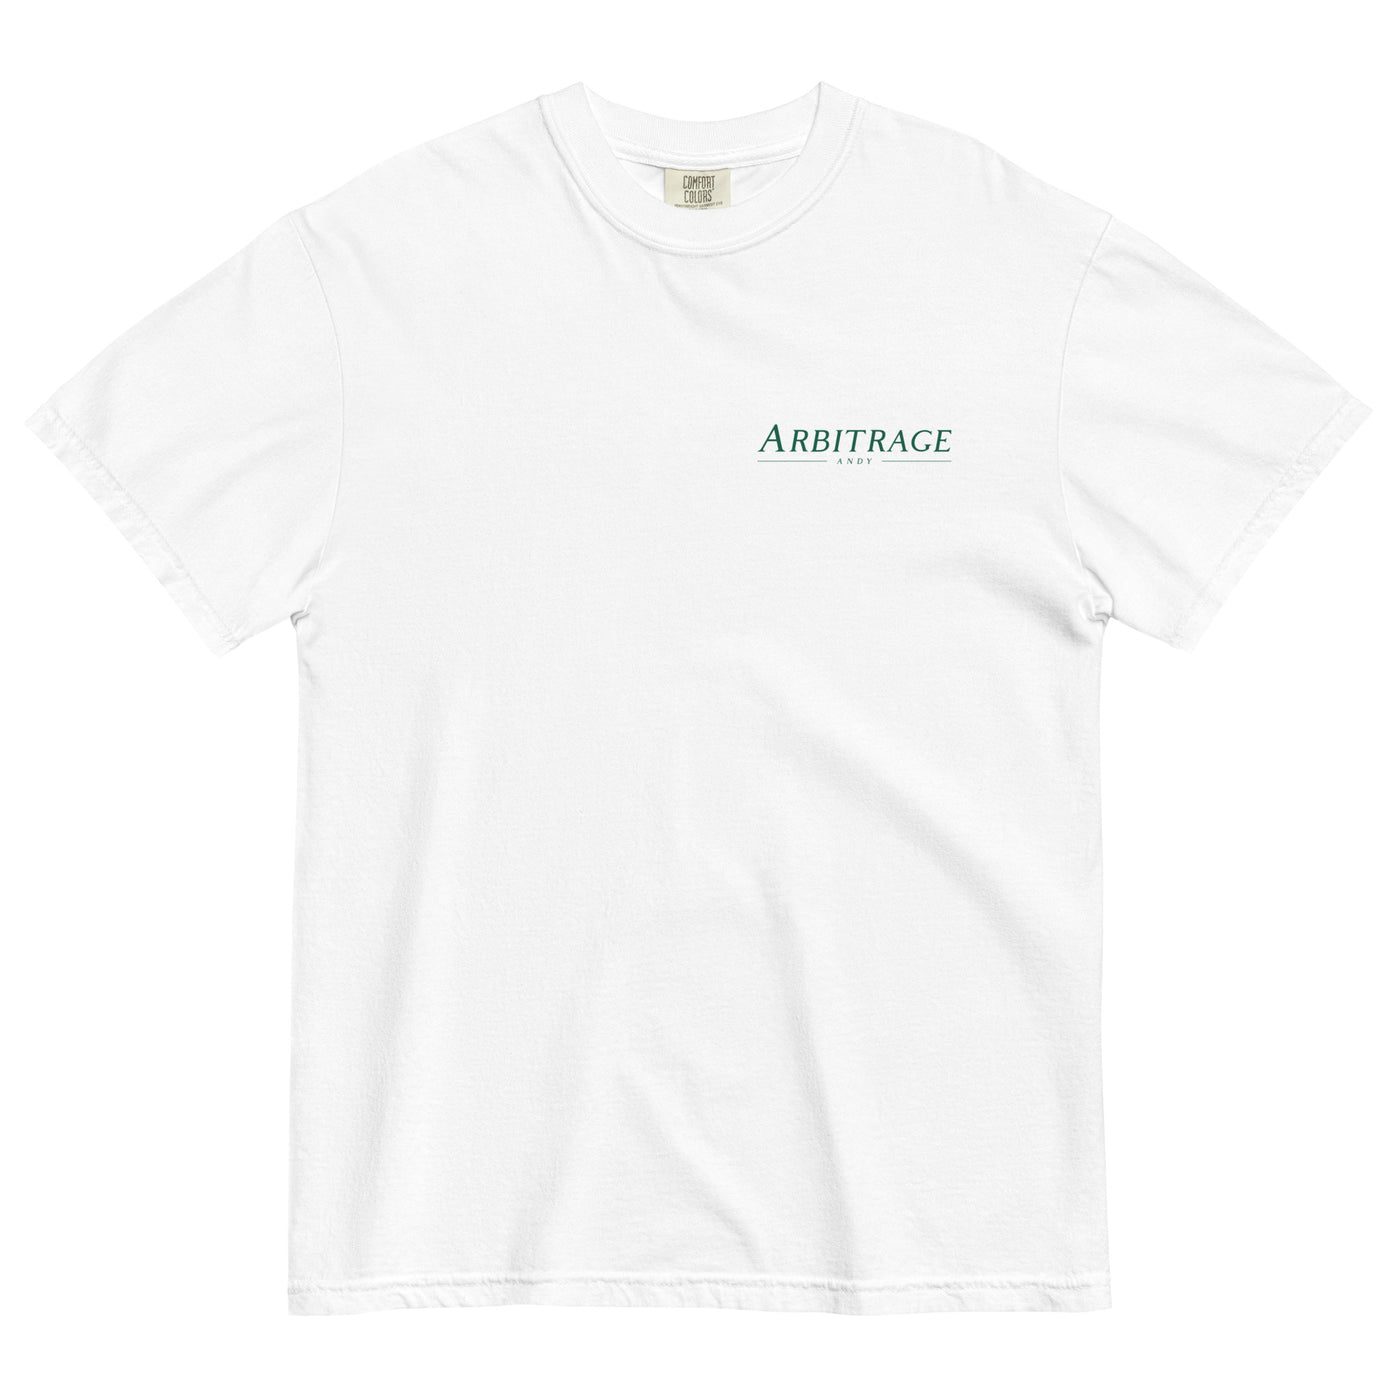 Arbitrage Andy Visit Africa T Shirt - Arbitrage Andy